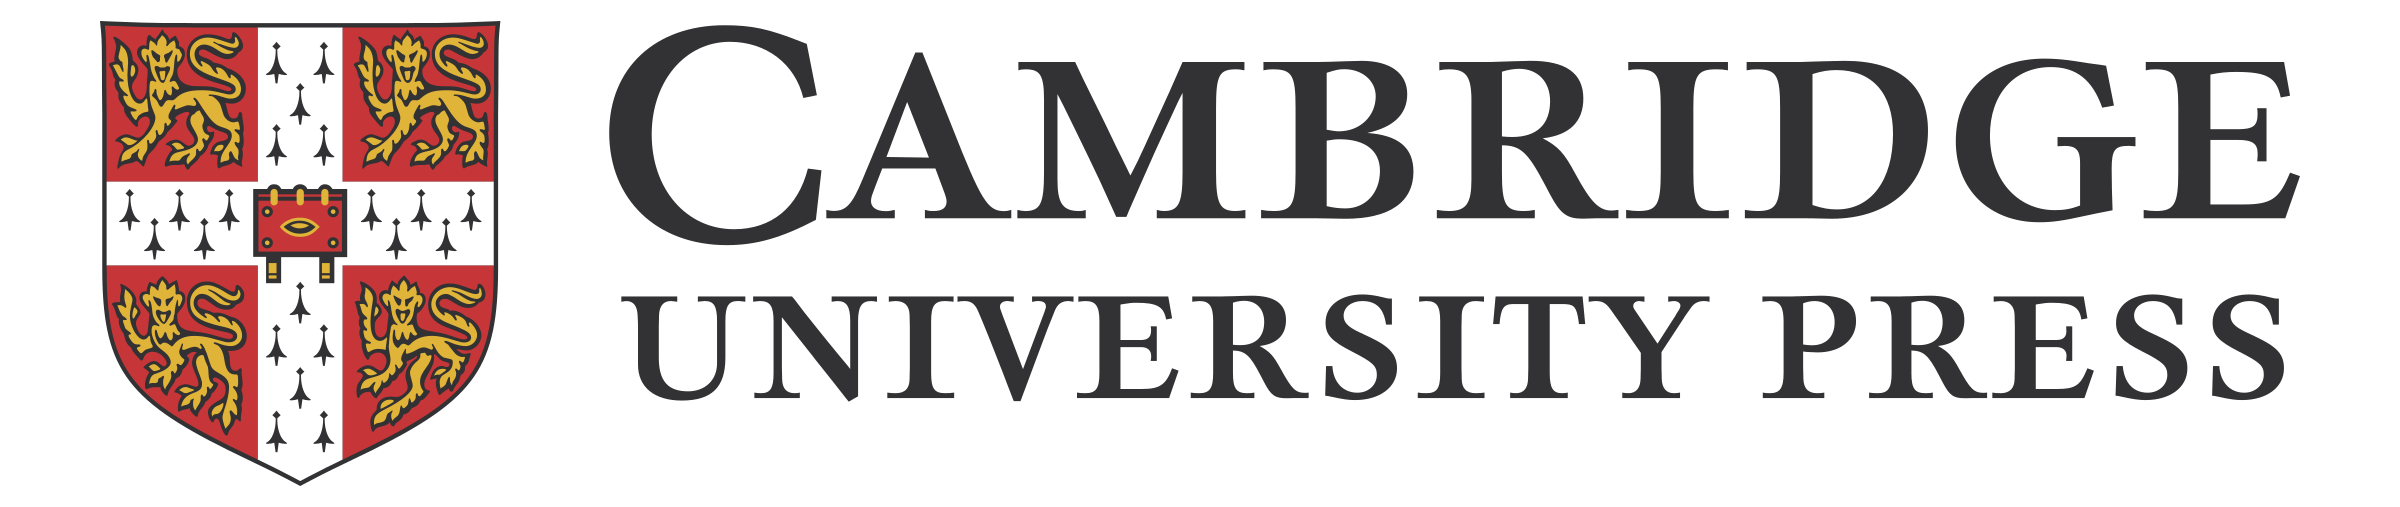 Cambridge univeristy Logo